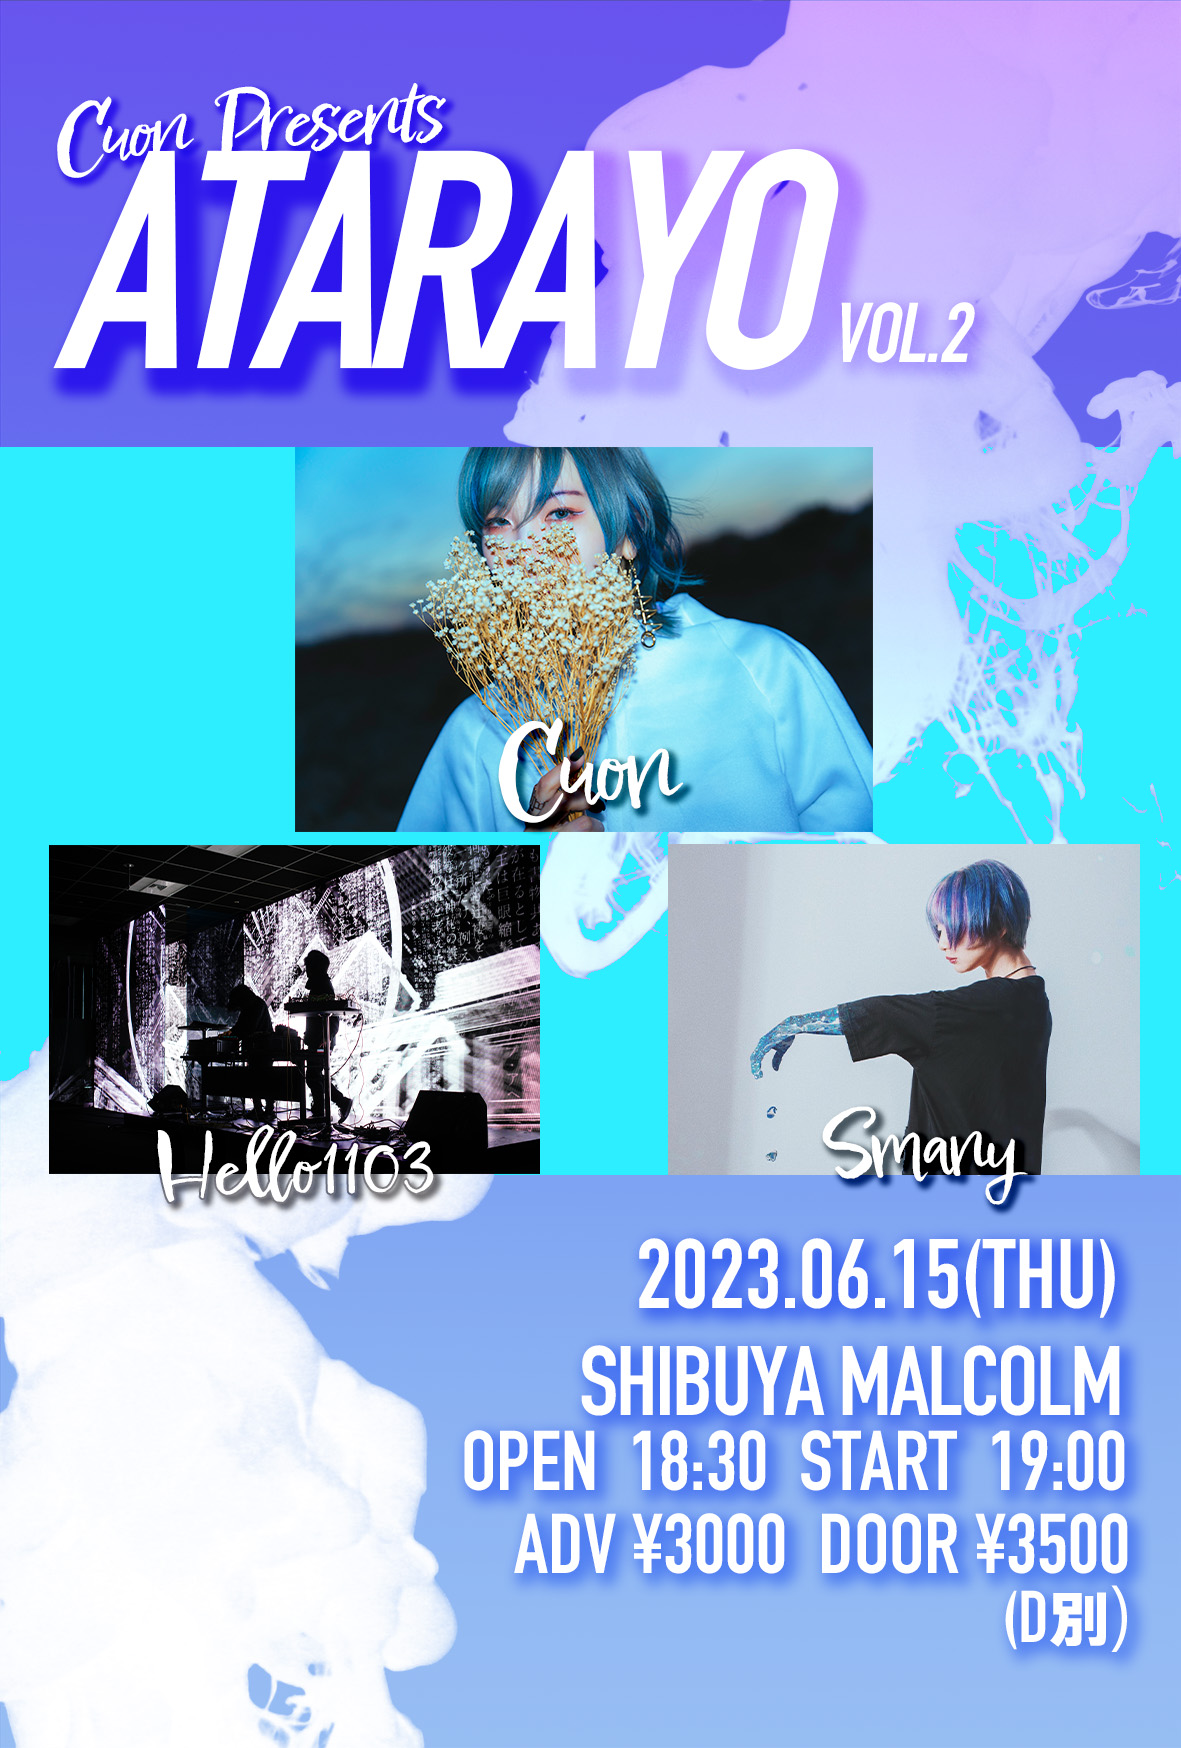 Cuon presents『ATARAYO vol.2』